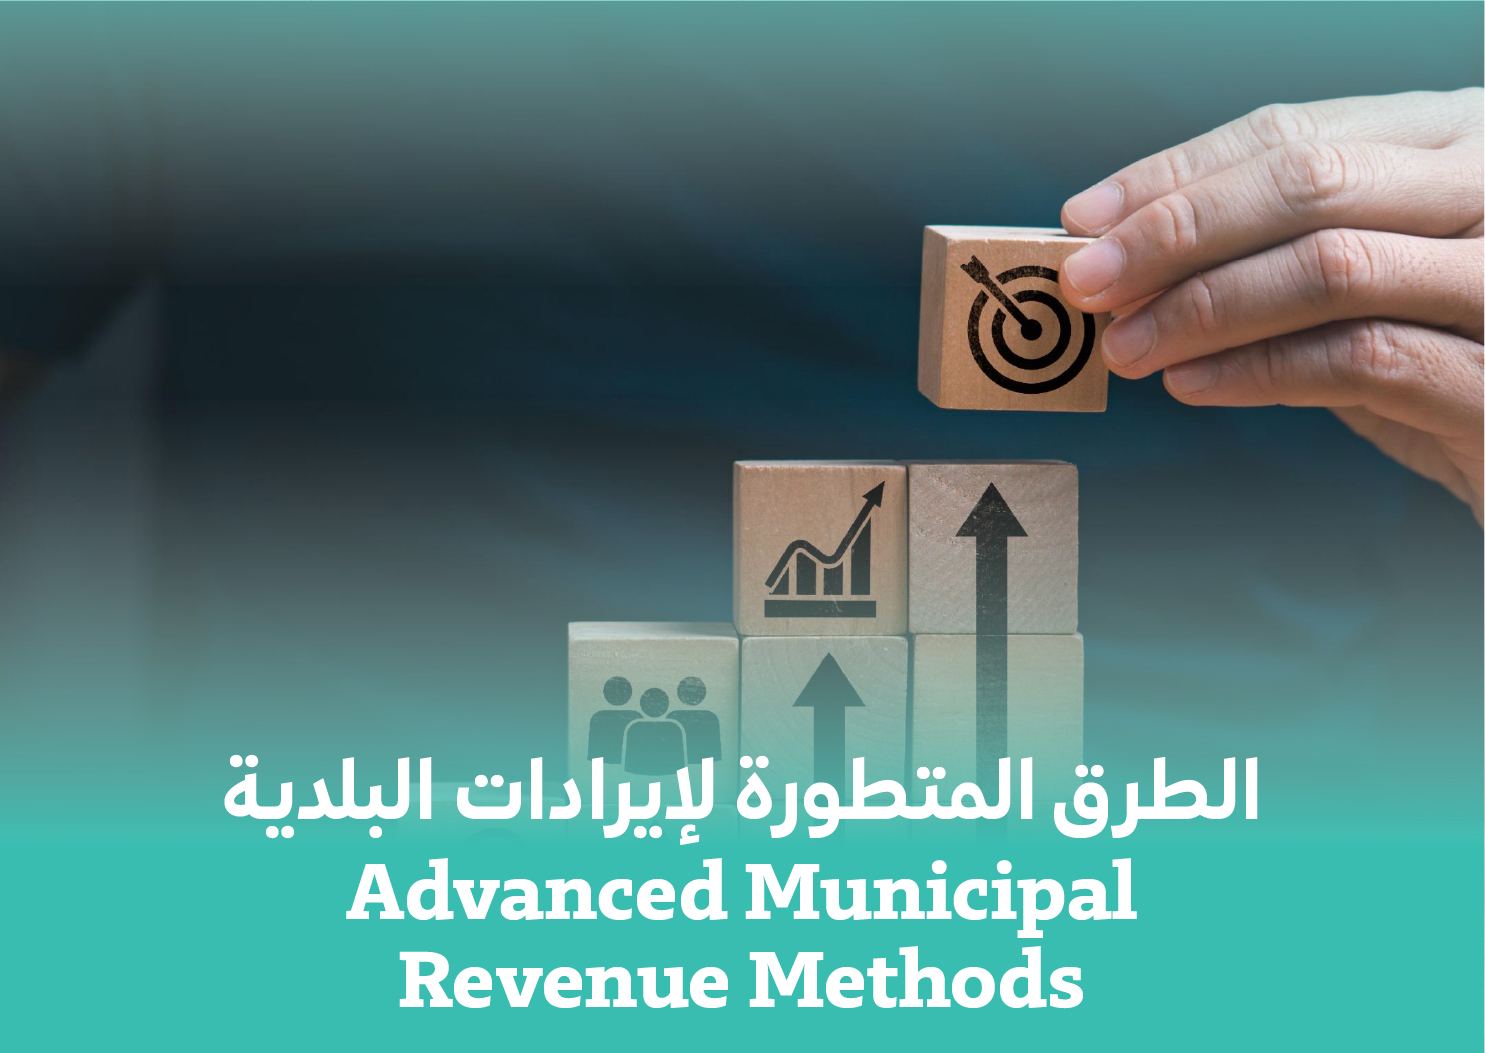  Advanced Municipal Revenue Methods